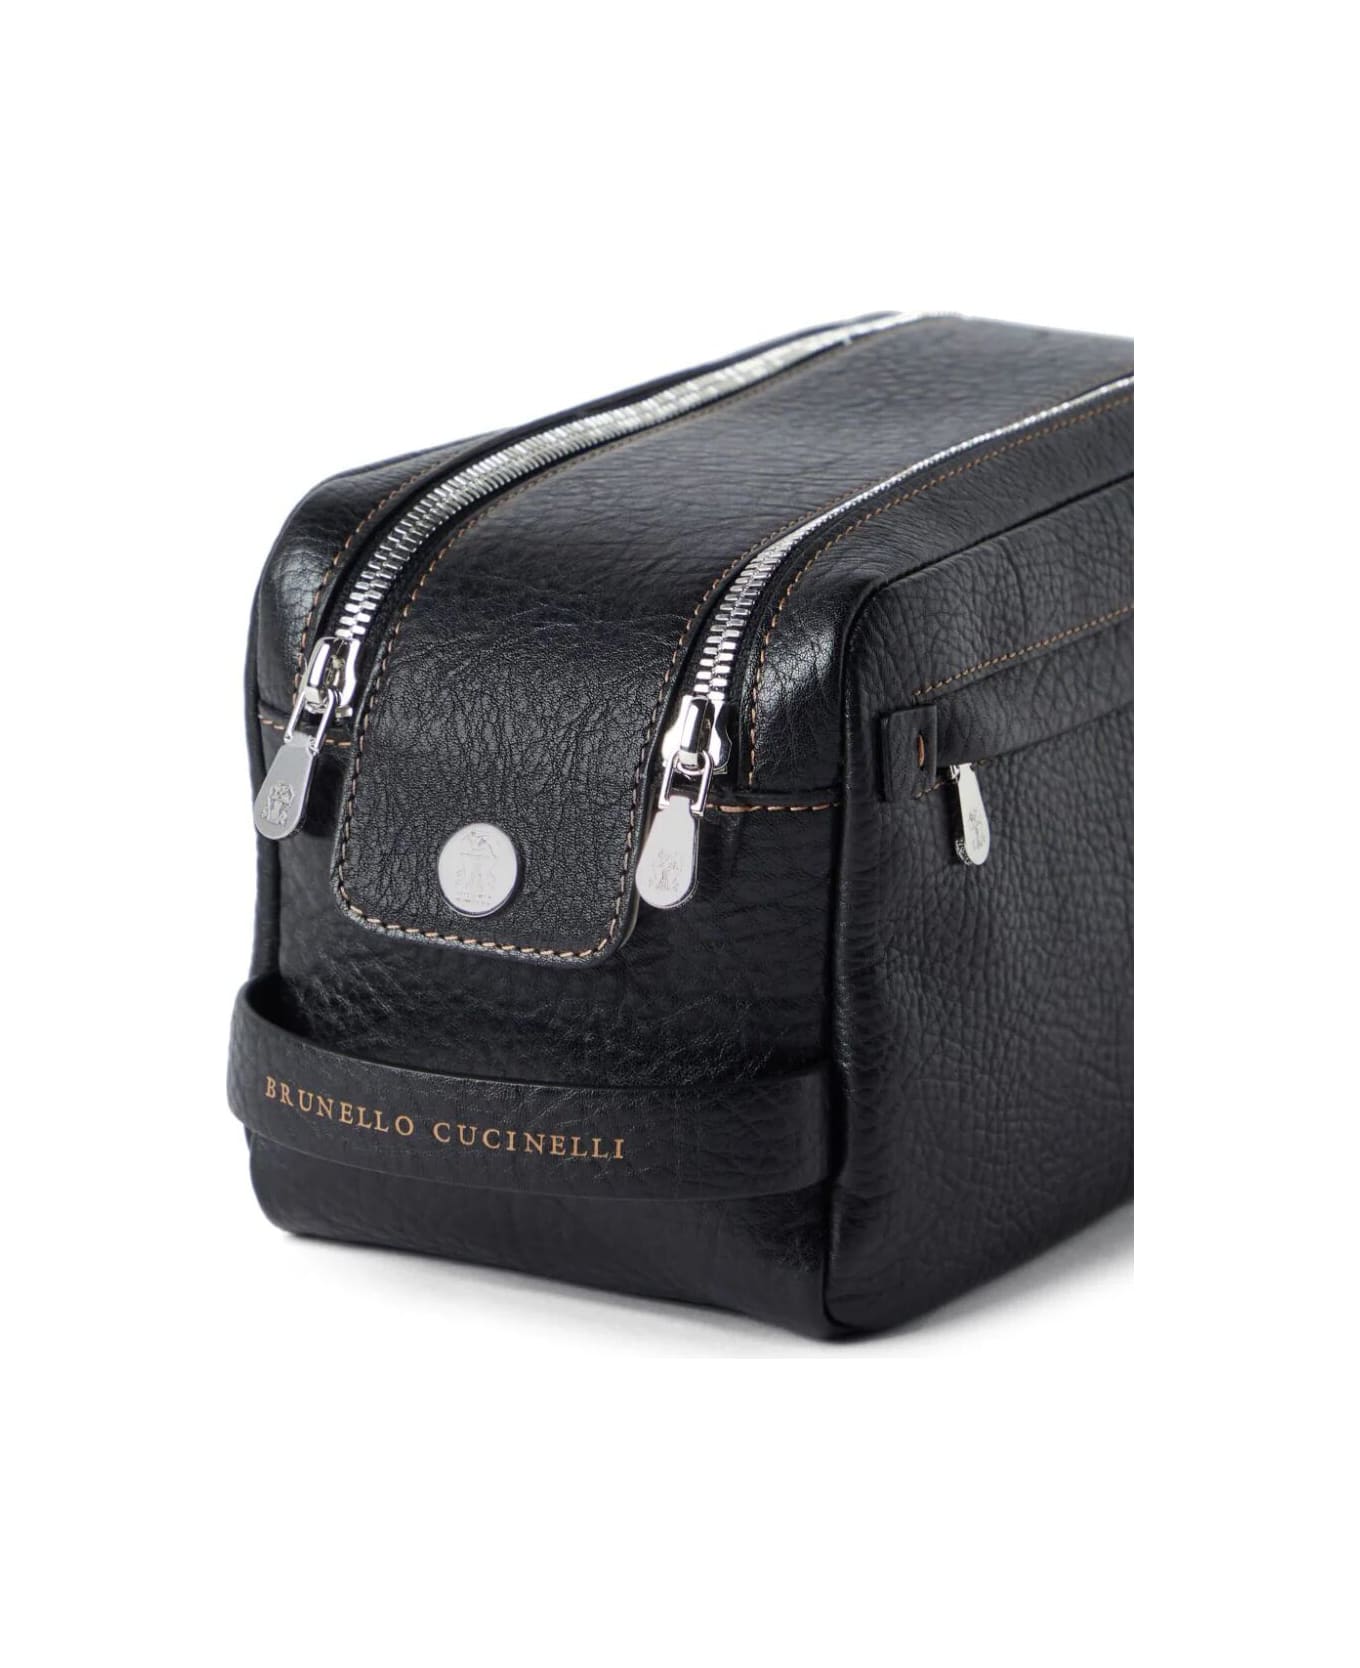 Brunello Cucinelli Leather Beauty Case - Black